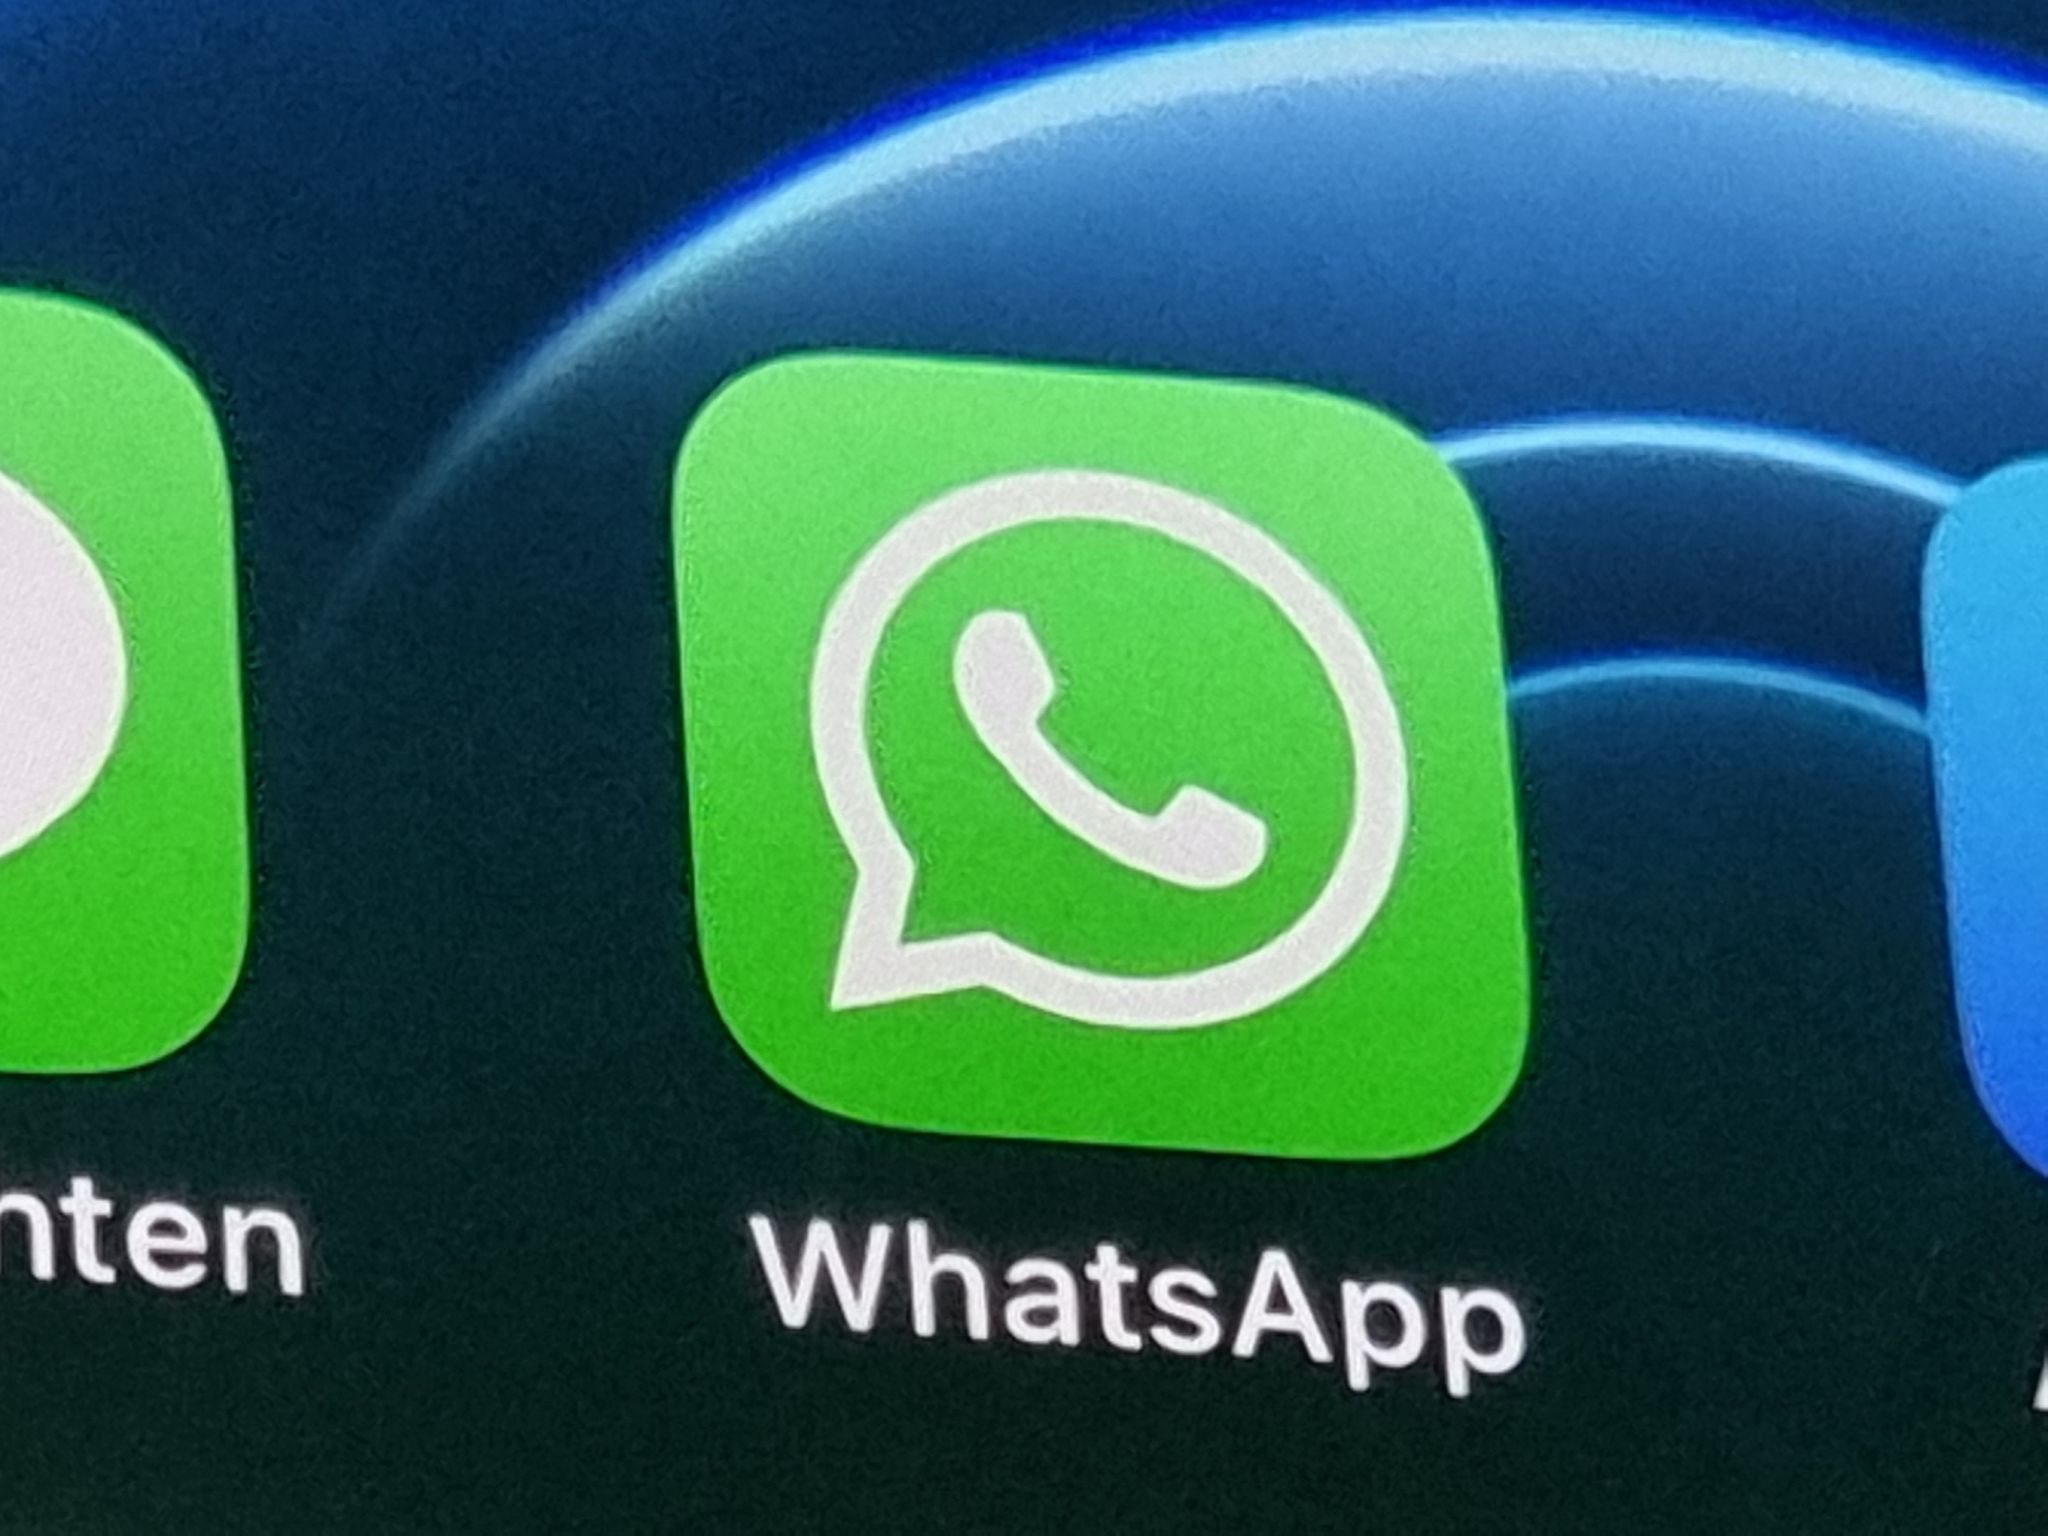 WhatsApp, plataforma de mensajería favorita (Foto: dpa)